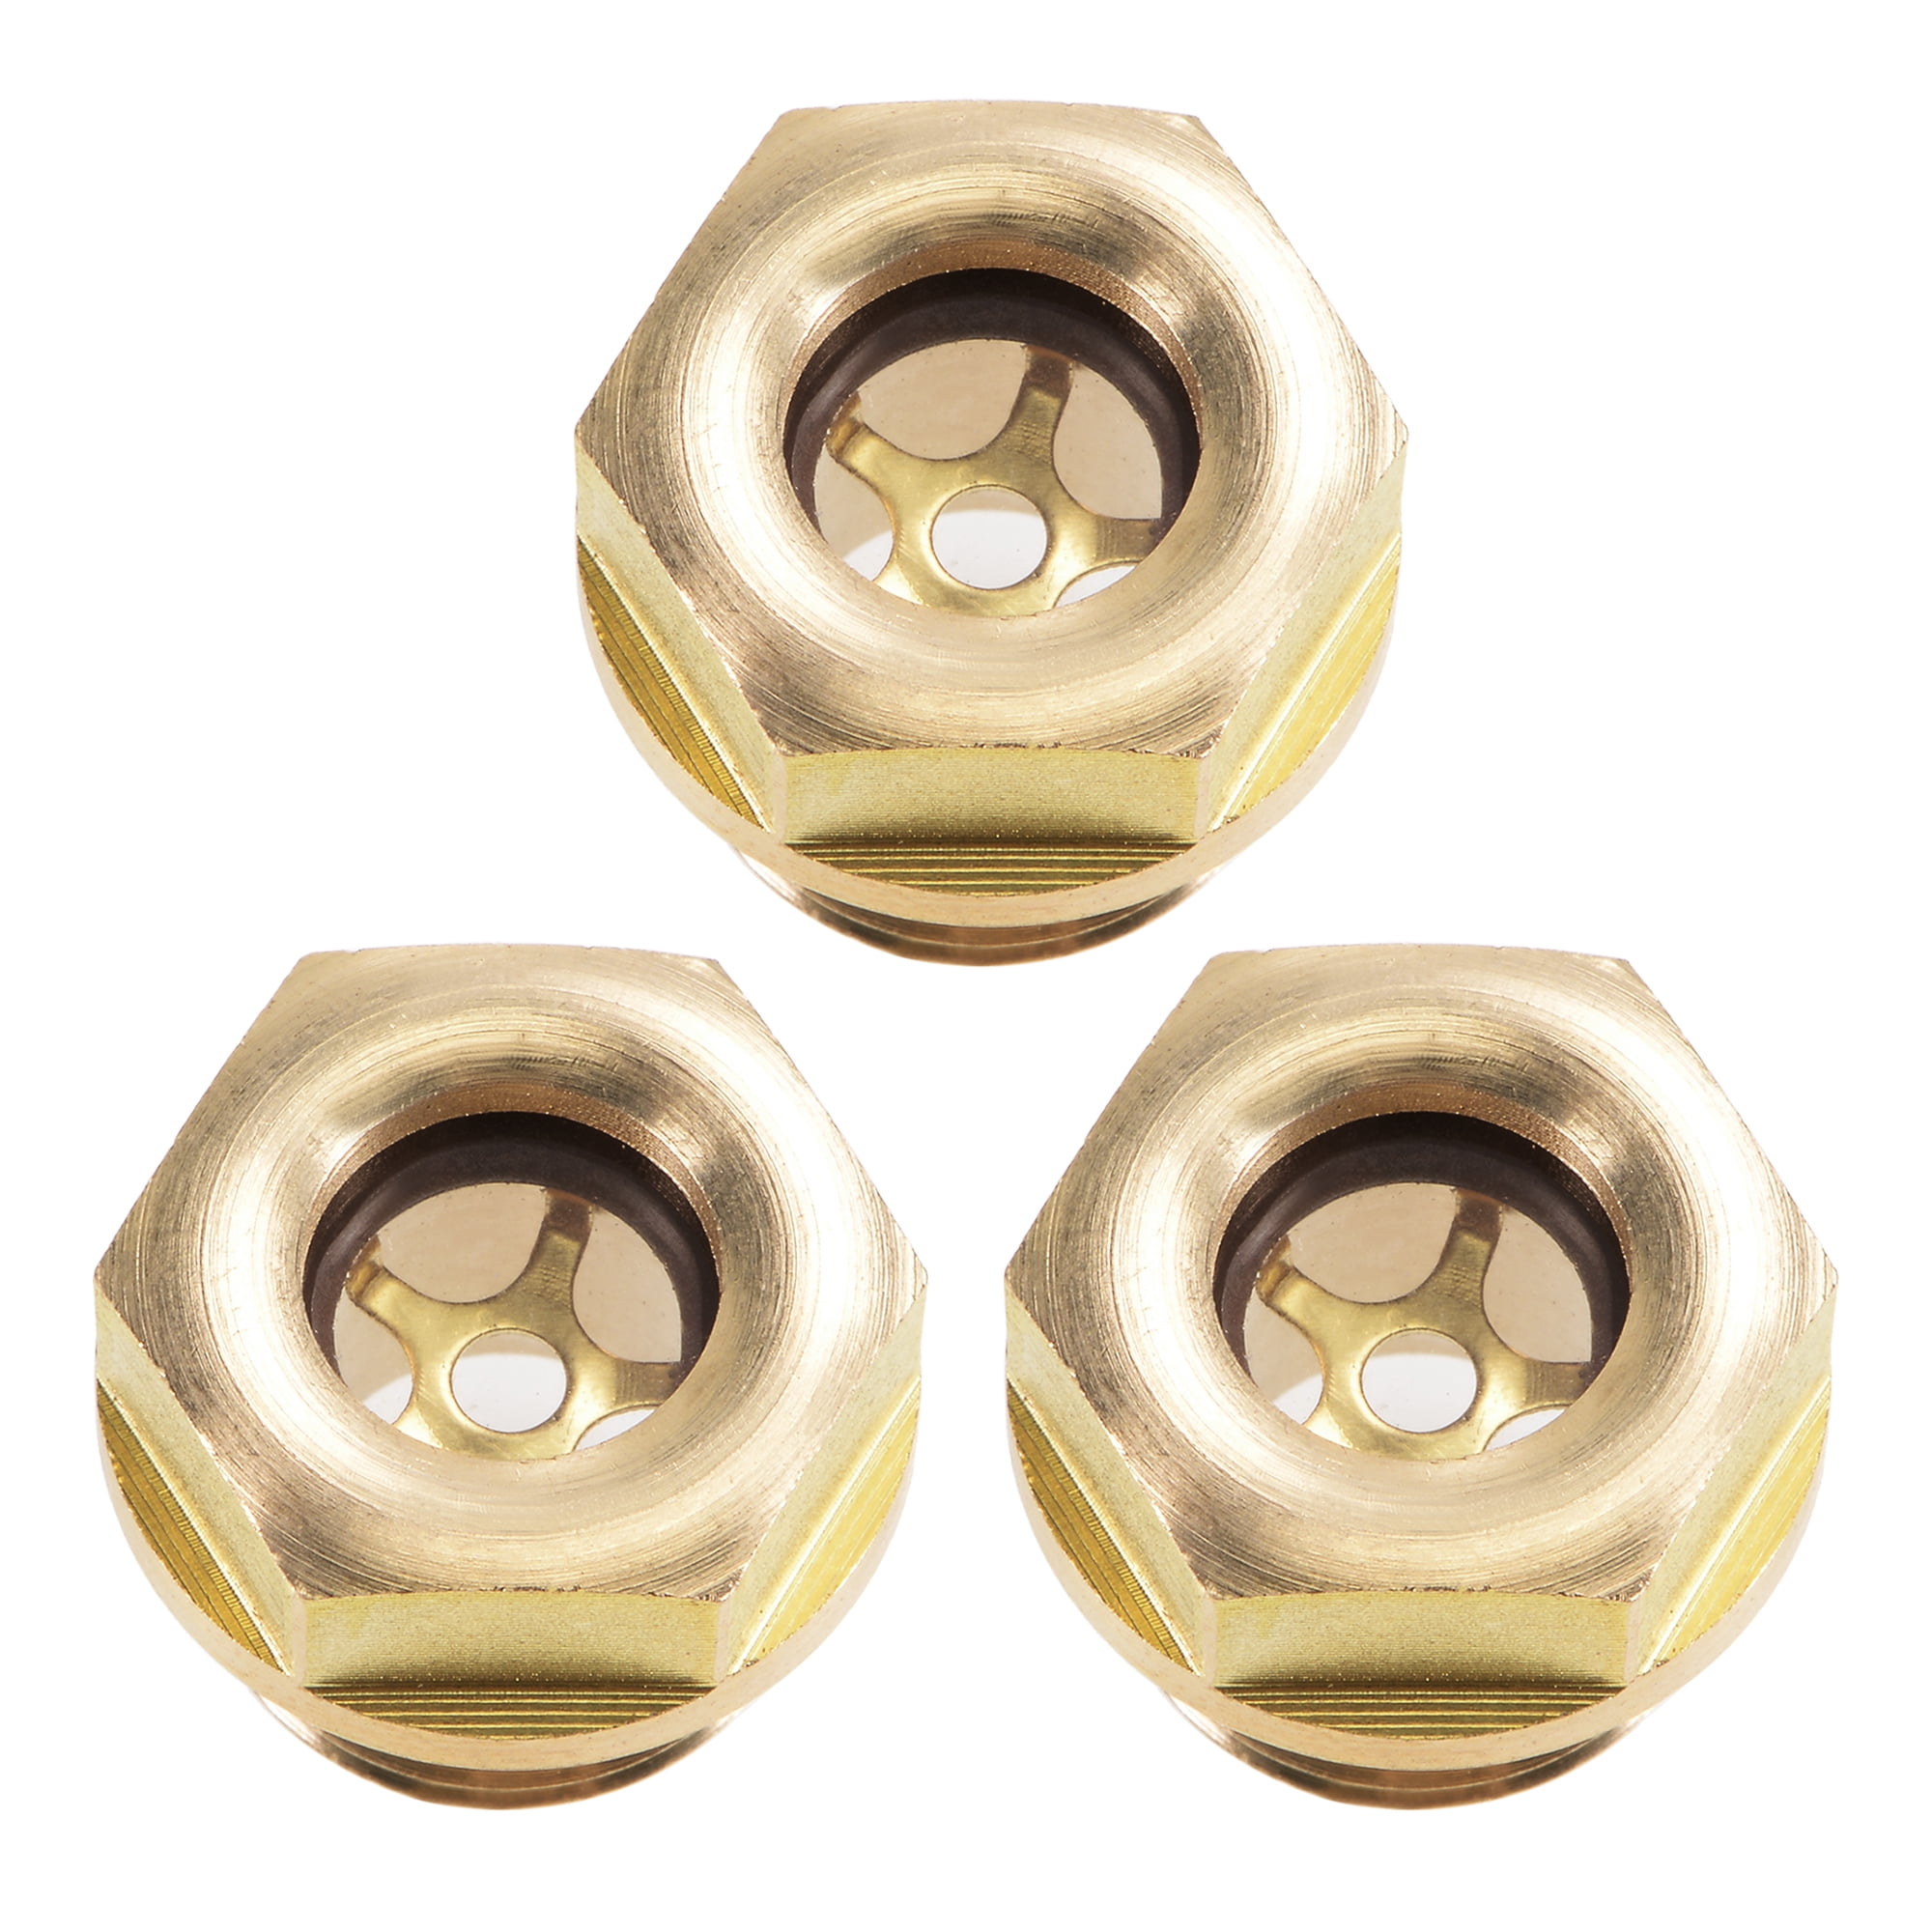 Oil Liquid Level Gauge Sight Glass G3 8 Male Threaded Brass Air Compressor Fittings With O Ring Yellow 3pcs Walmart Com Walmart Com